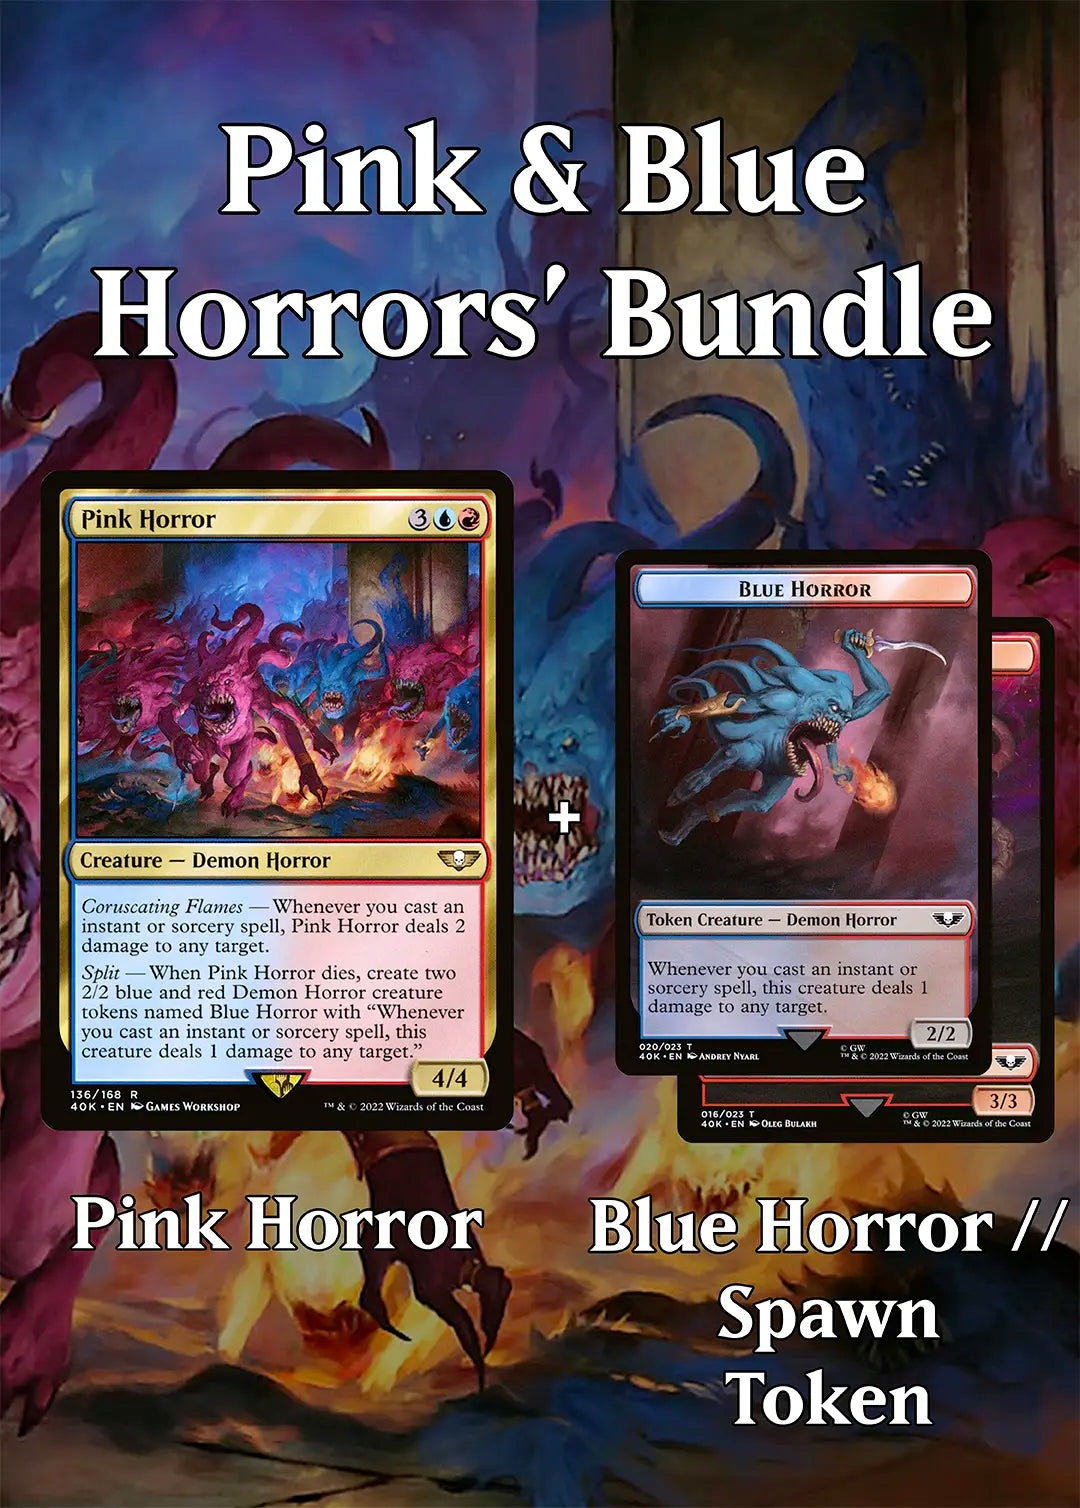 Pink & Blue Horrors' Bundle